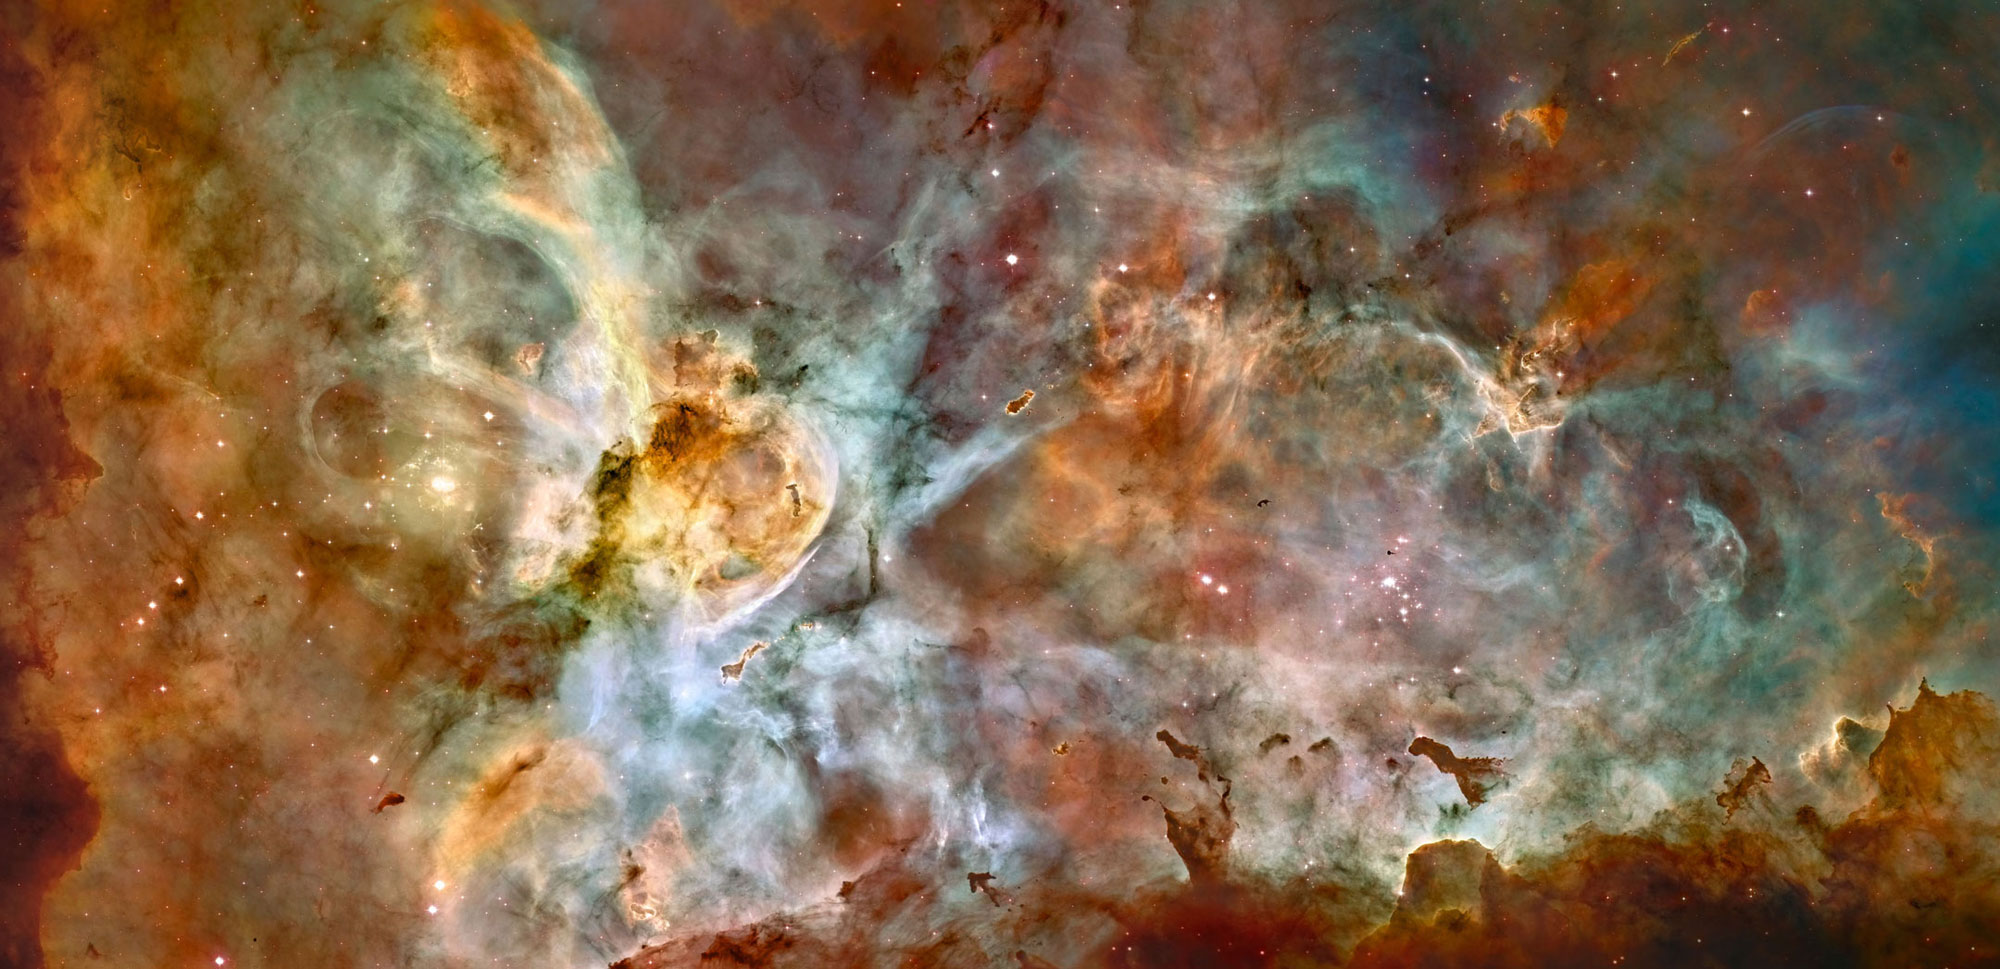 HST panoramic composite of the Keyhole Nebula region